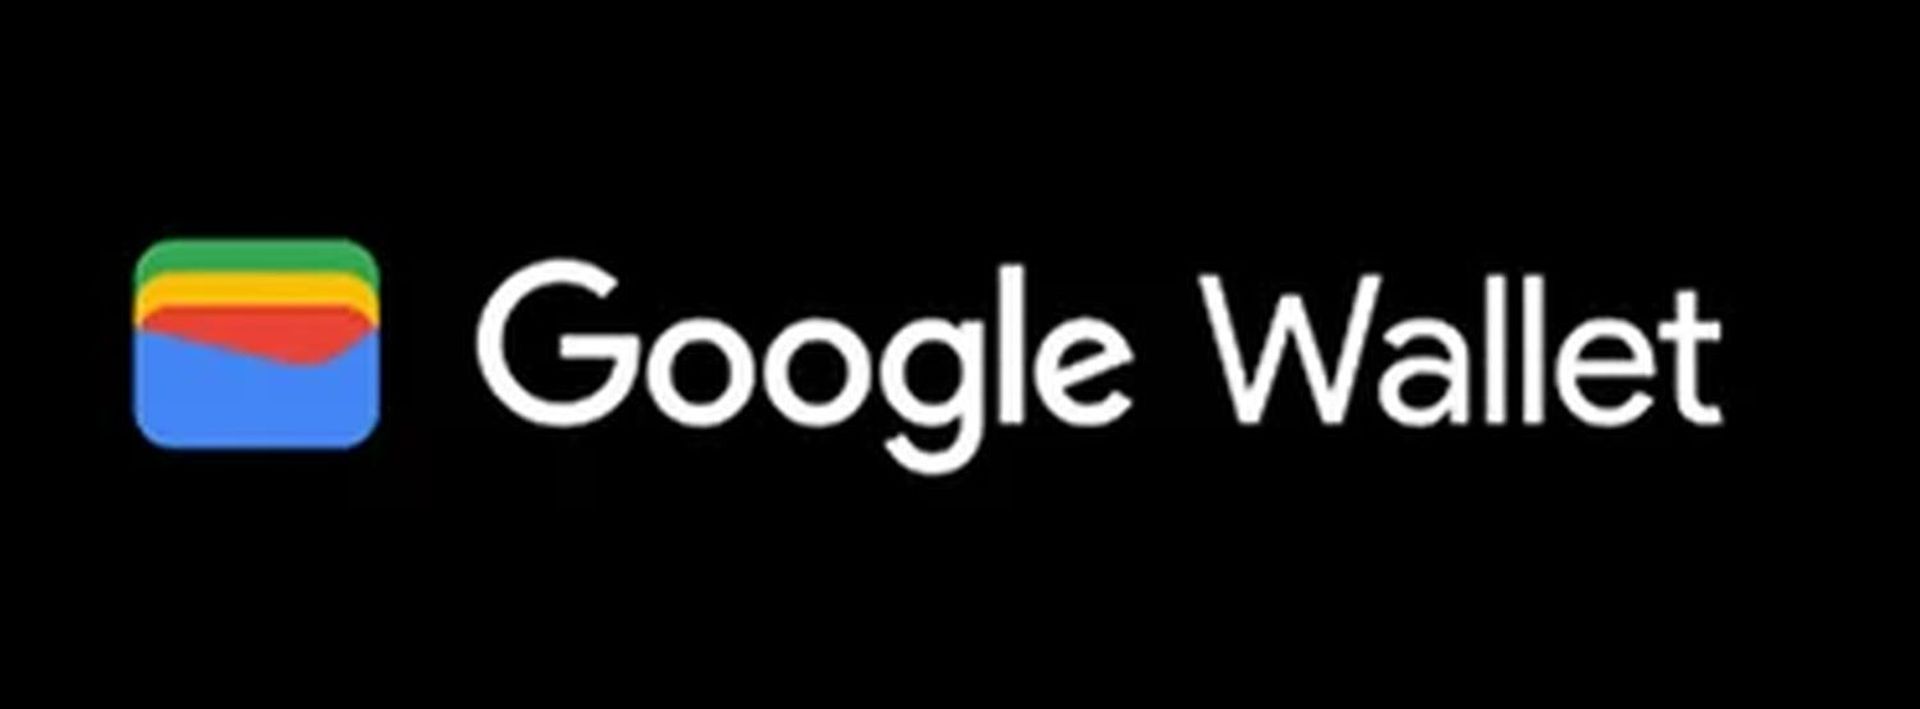 Pelajari mengapa Google Wallet tidak berfungsi dengan panduan komprehensif kami! Selain itu, ada alternatif Google Wallet yang patut dicoba. Jelajahi sekarang!